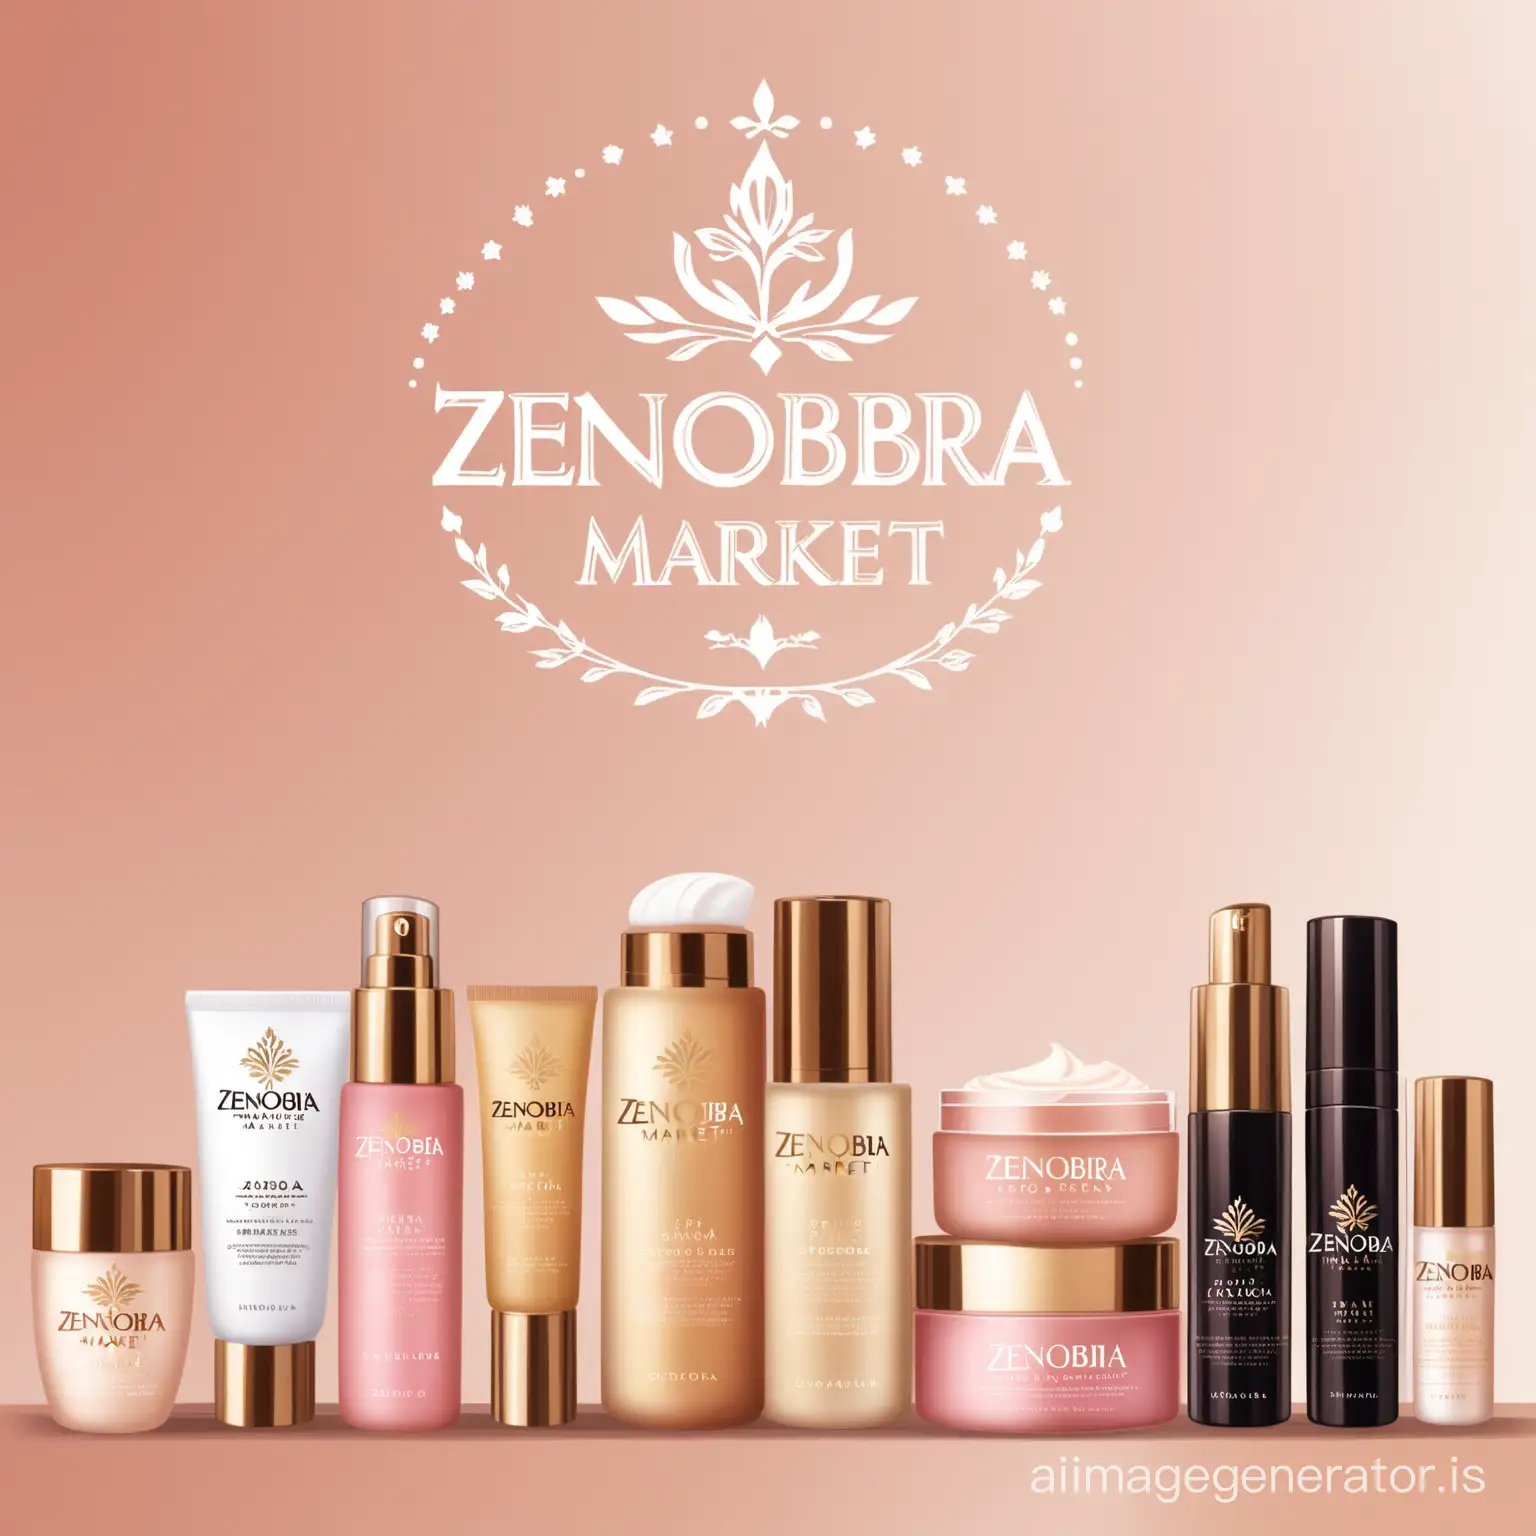 Zenobia Market logo 
Makeup and skincare